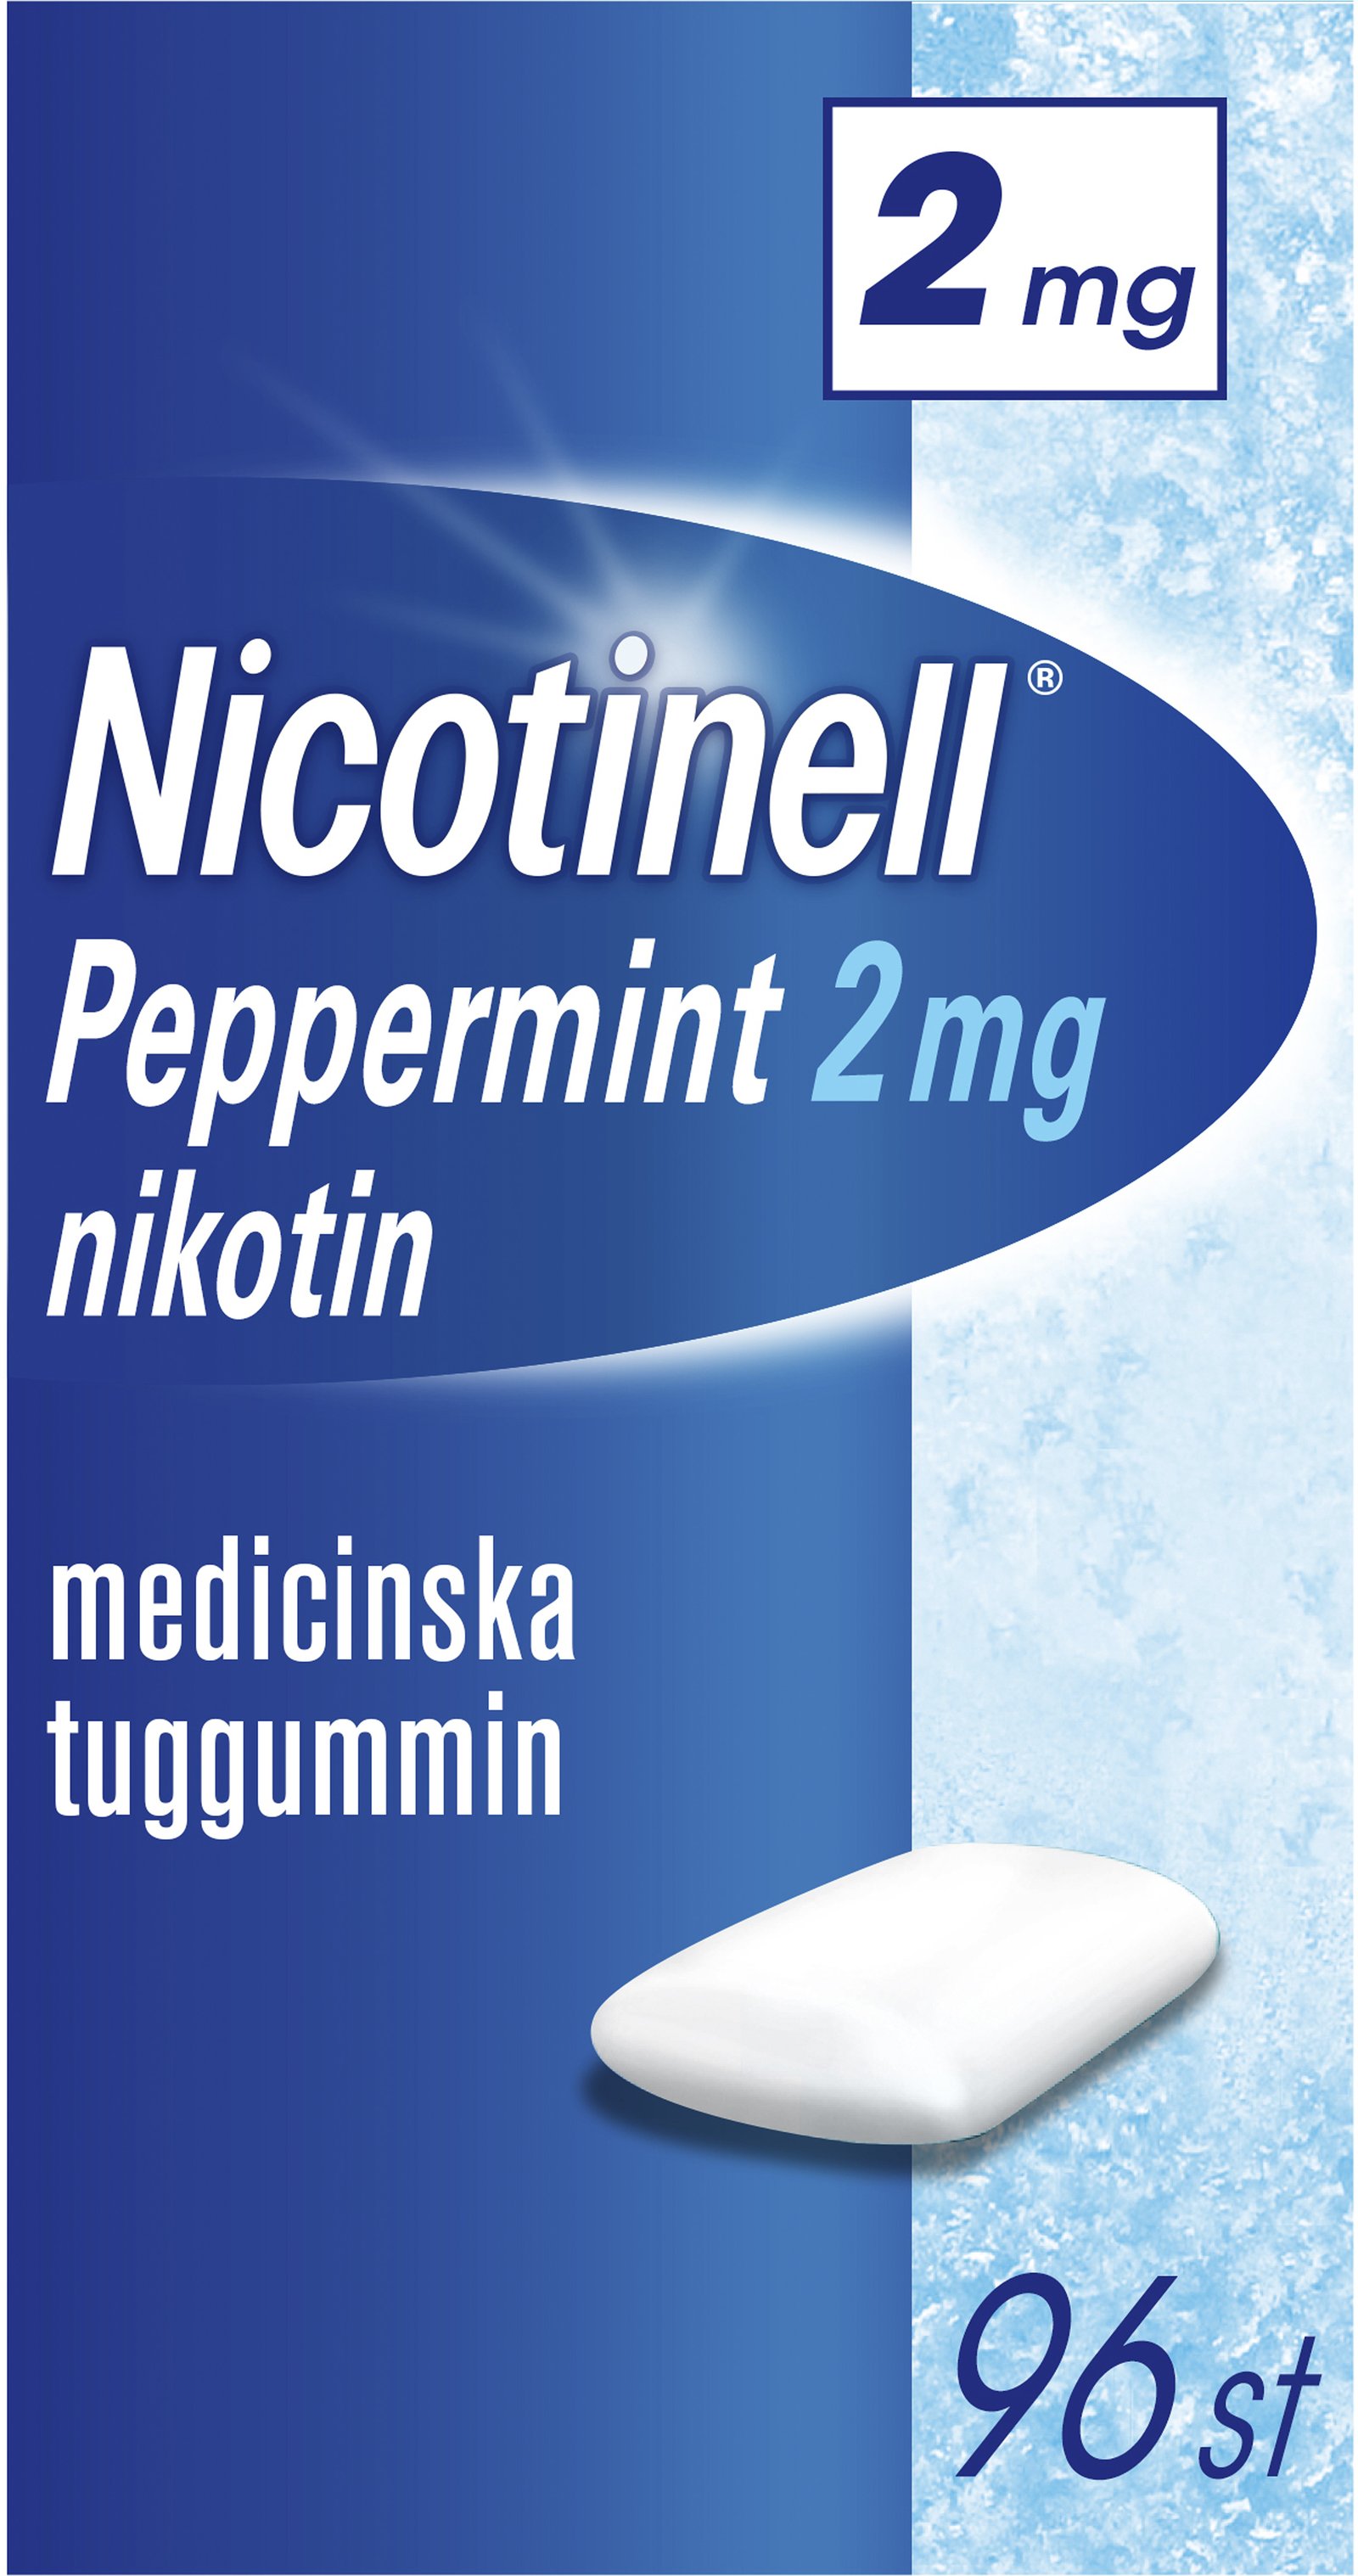 Nicotinell Peppermint 2mg Nikotin Medicinska tuggummin 96 st